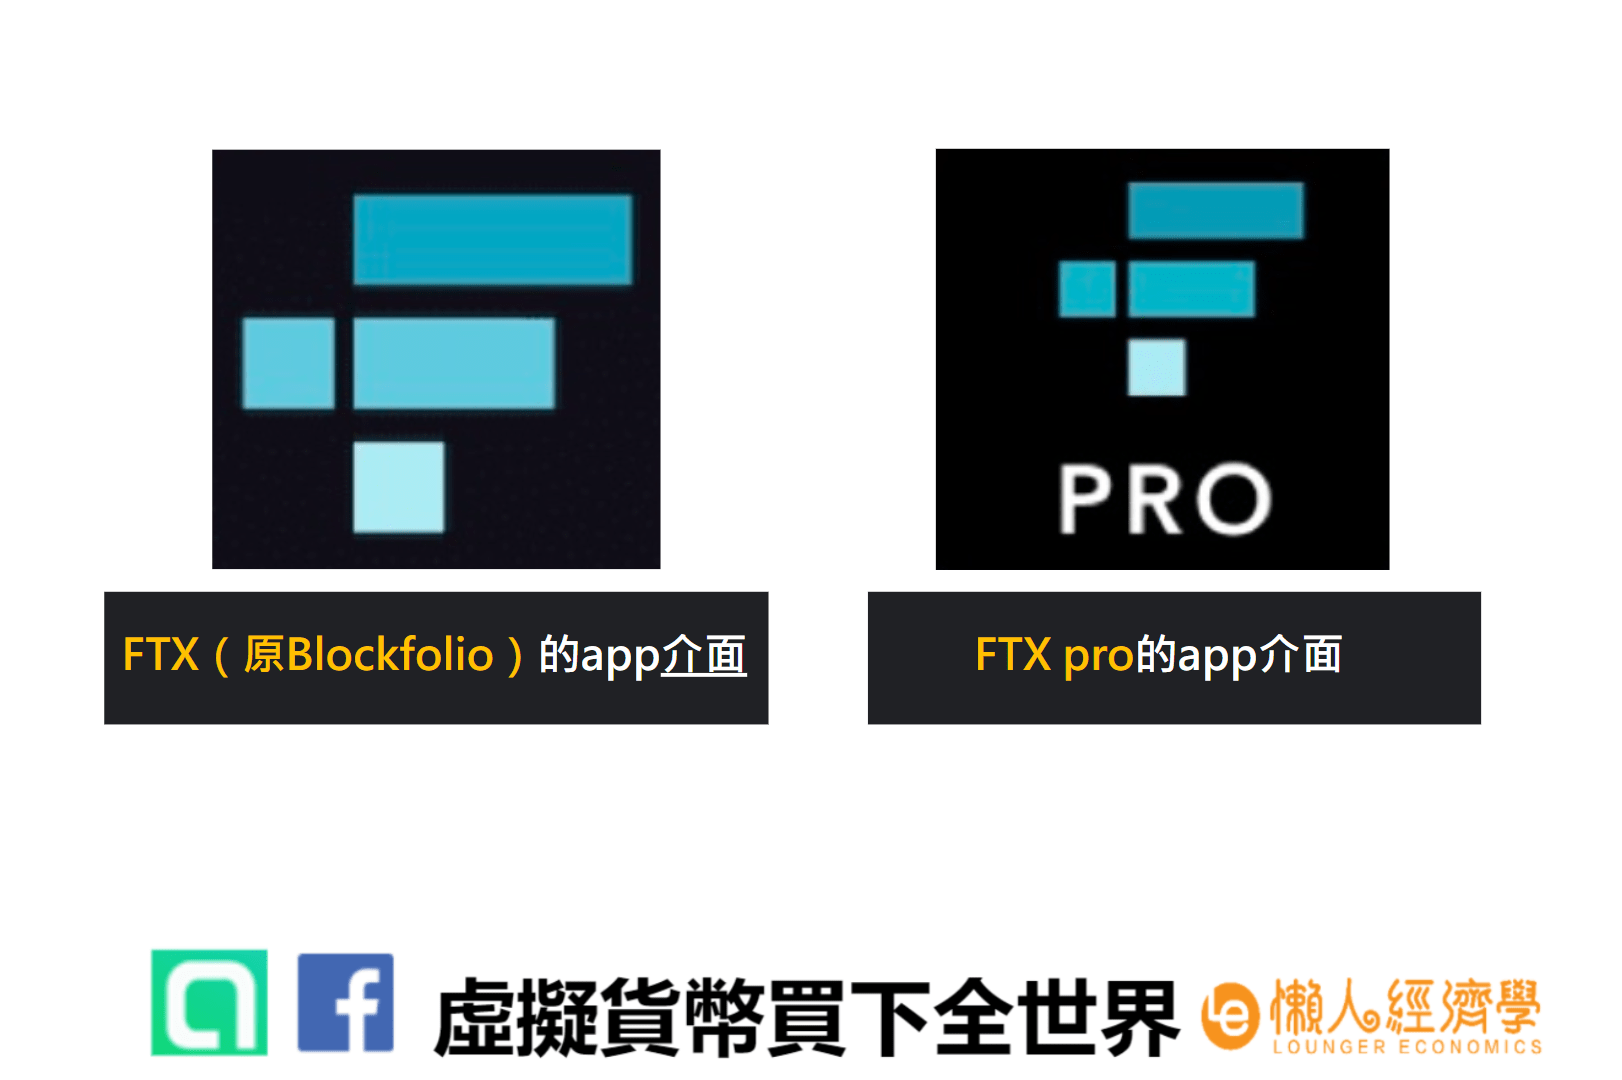 FTX（原Blockfolio）和FTX Pro的圖片差異